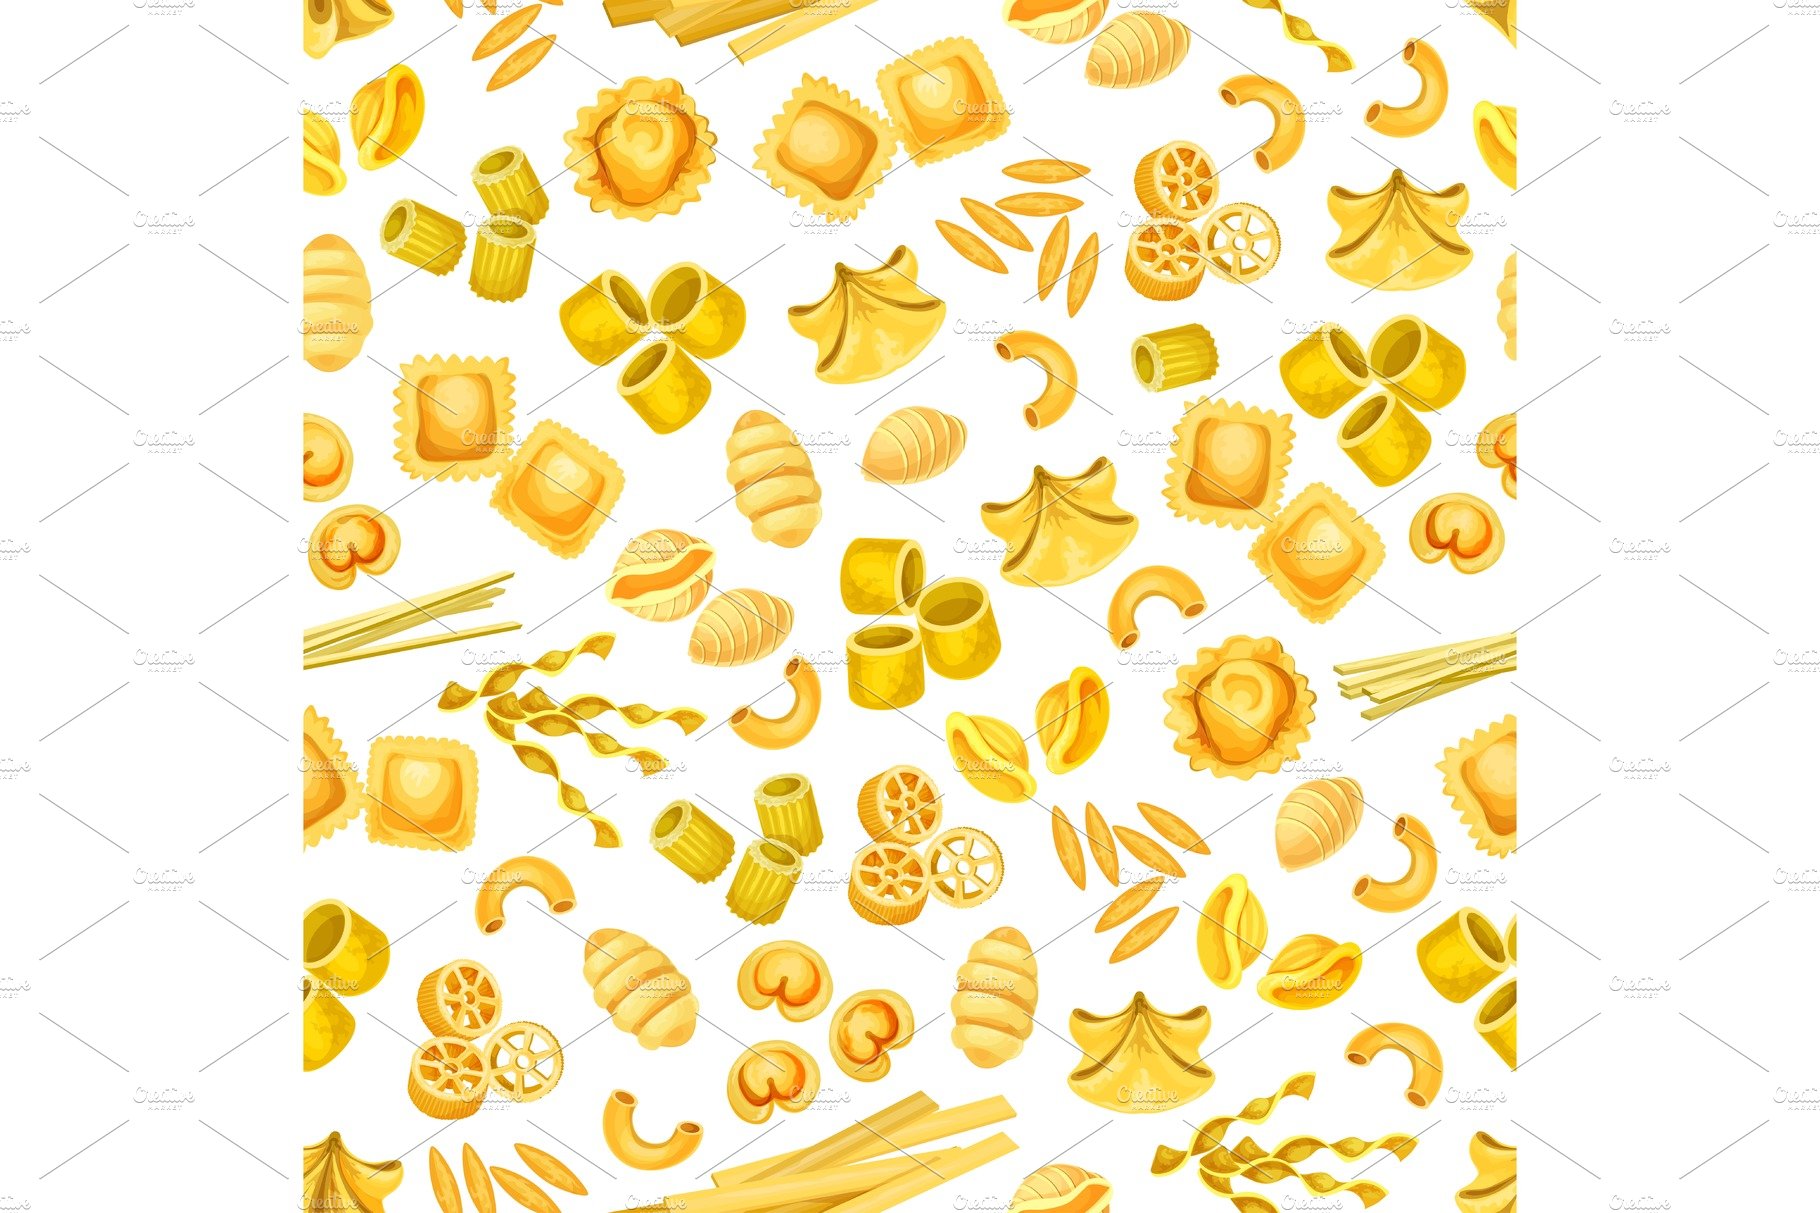 Italian pasta seamless pattern cover image.